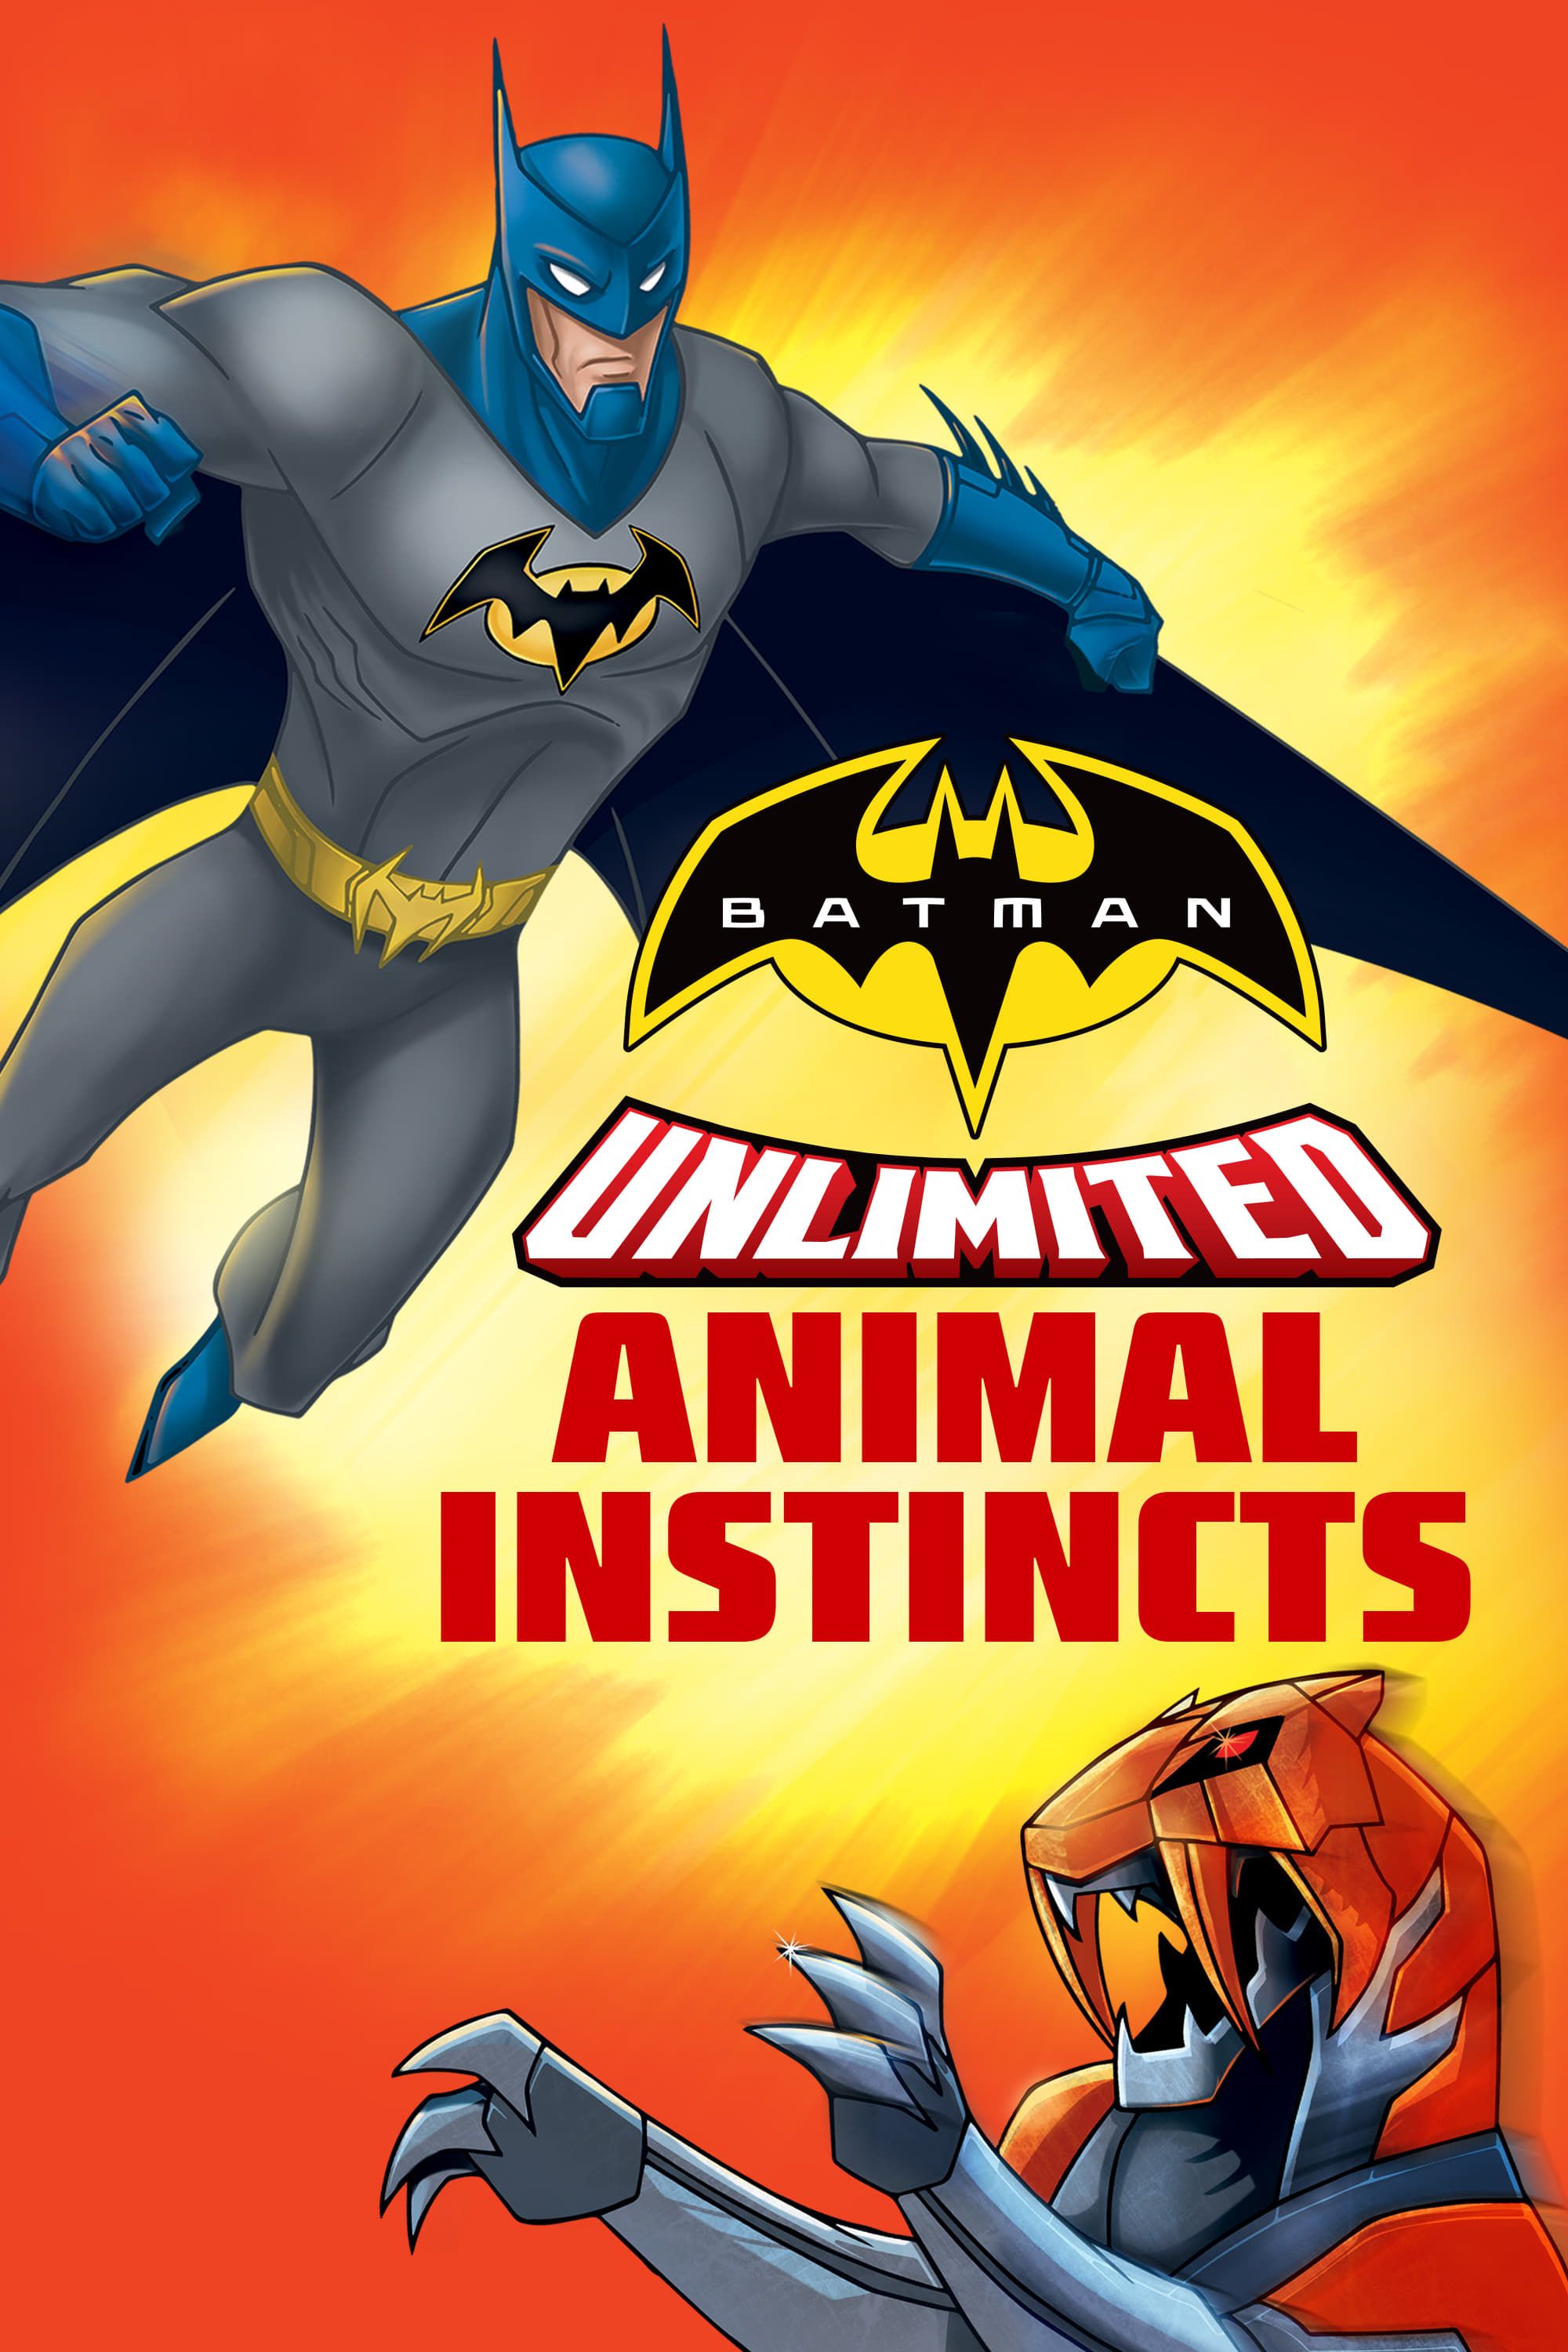 batman unlimited animal instincts